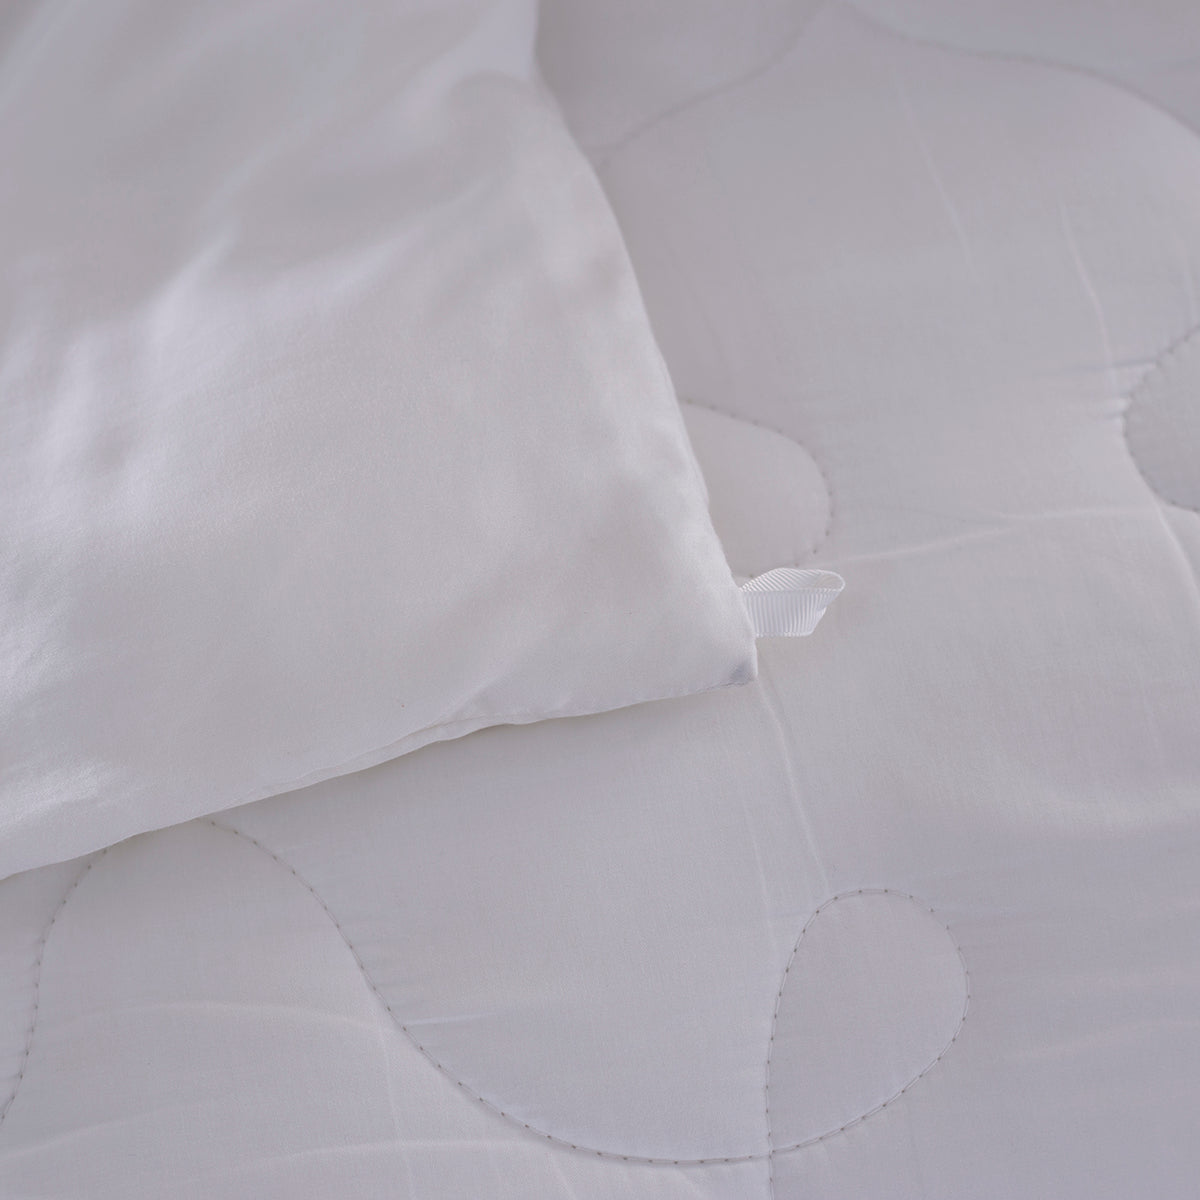 Diamonique Excel Fabric All Season Light Weight Super Soft & Plush Duvet Insert/Quilt